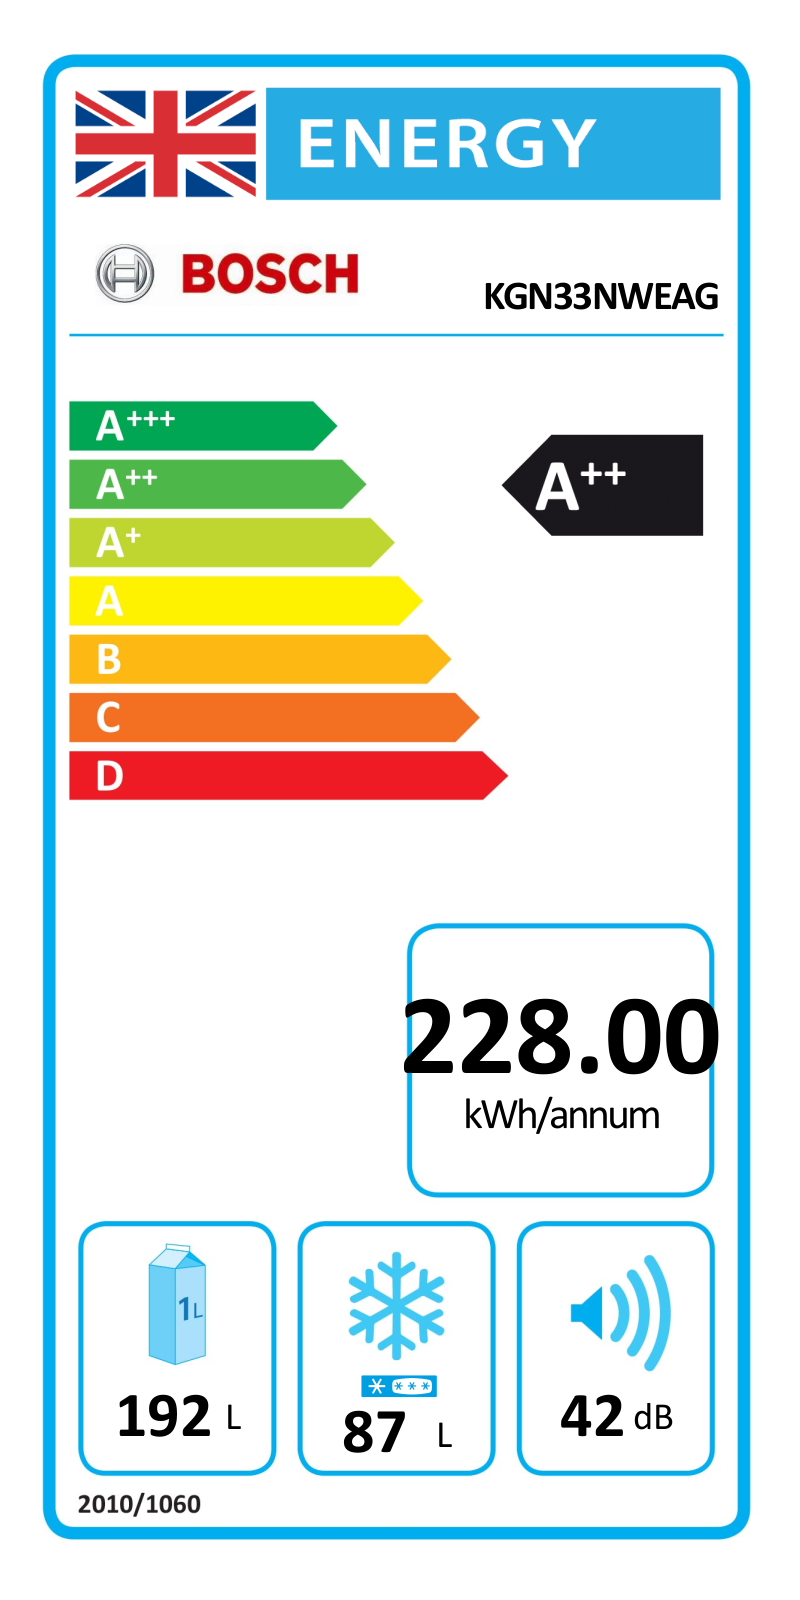 Bosch KGN33NWEAG EU Energy Label